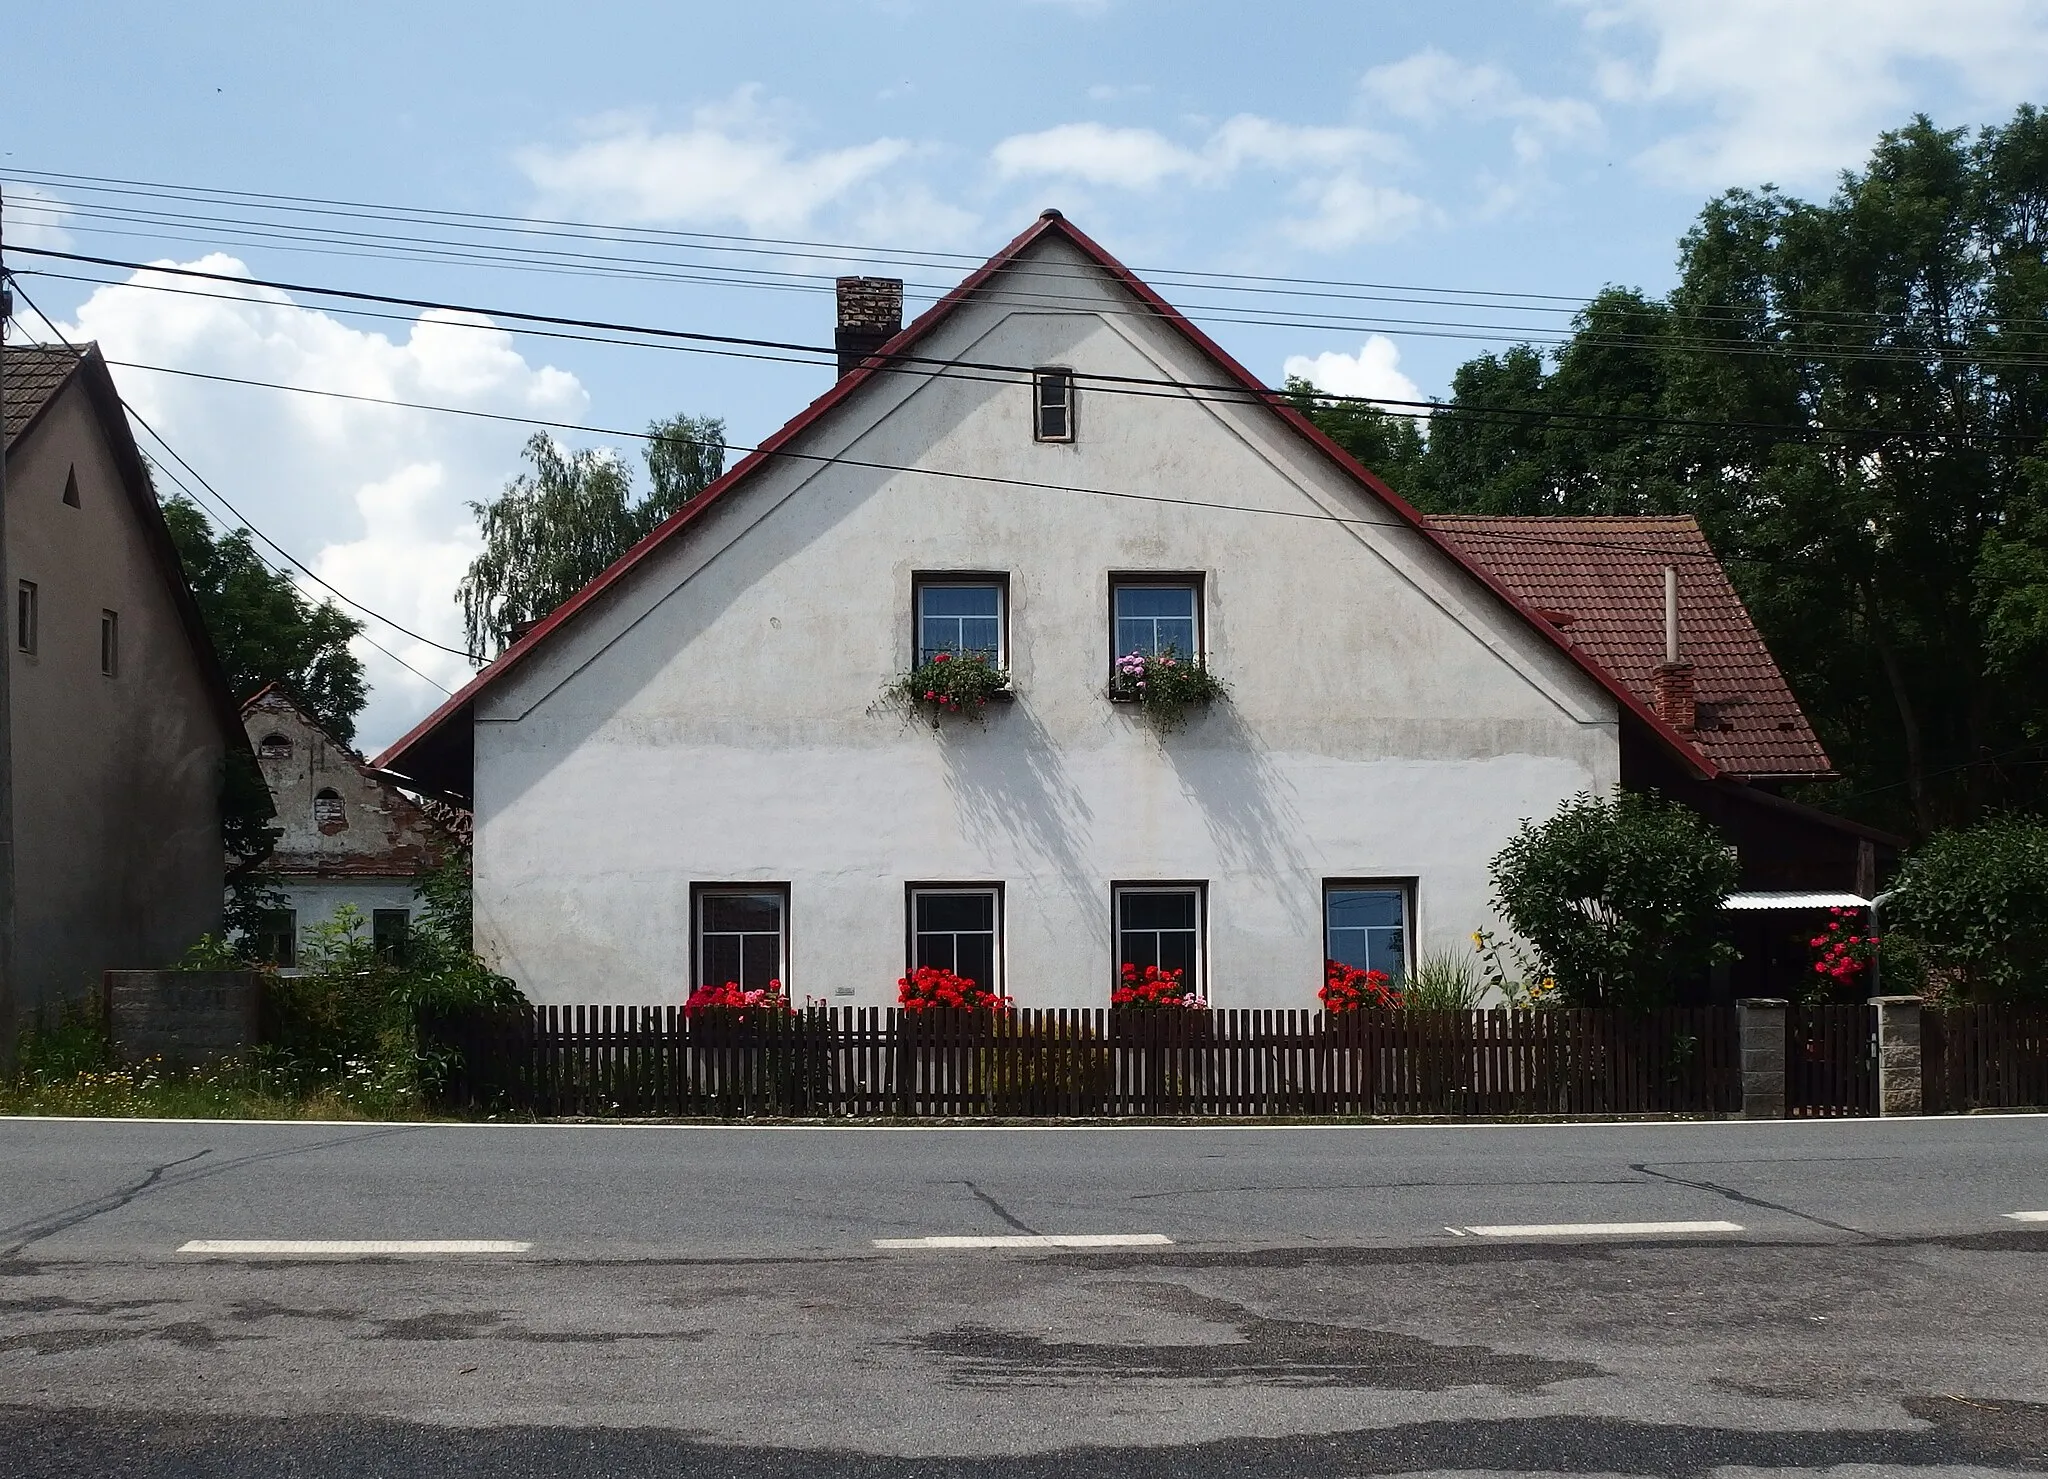 Photo showing: Rodkov, Žďár nad Sázavou District, Czechia.